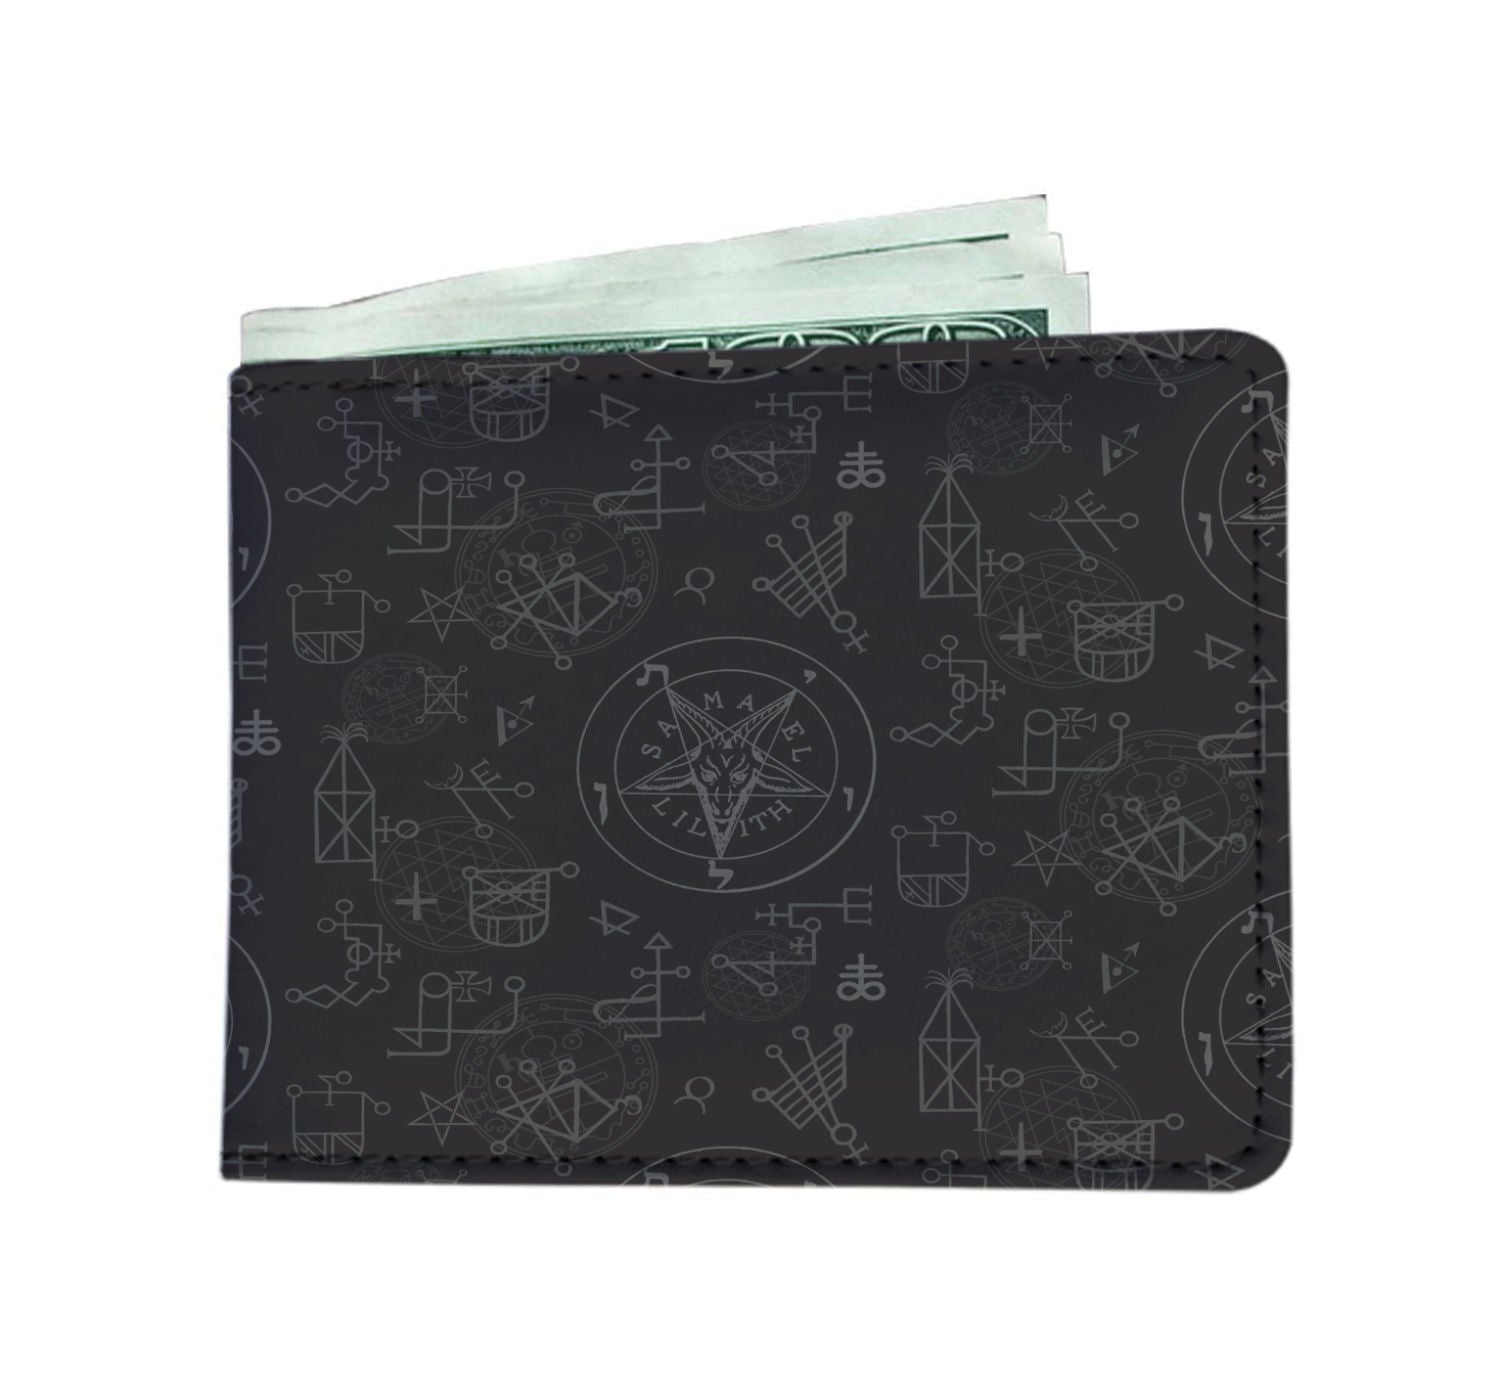 The Satans Star wallet